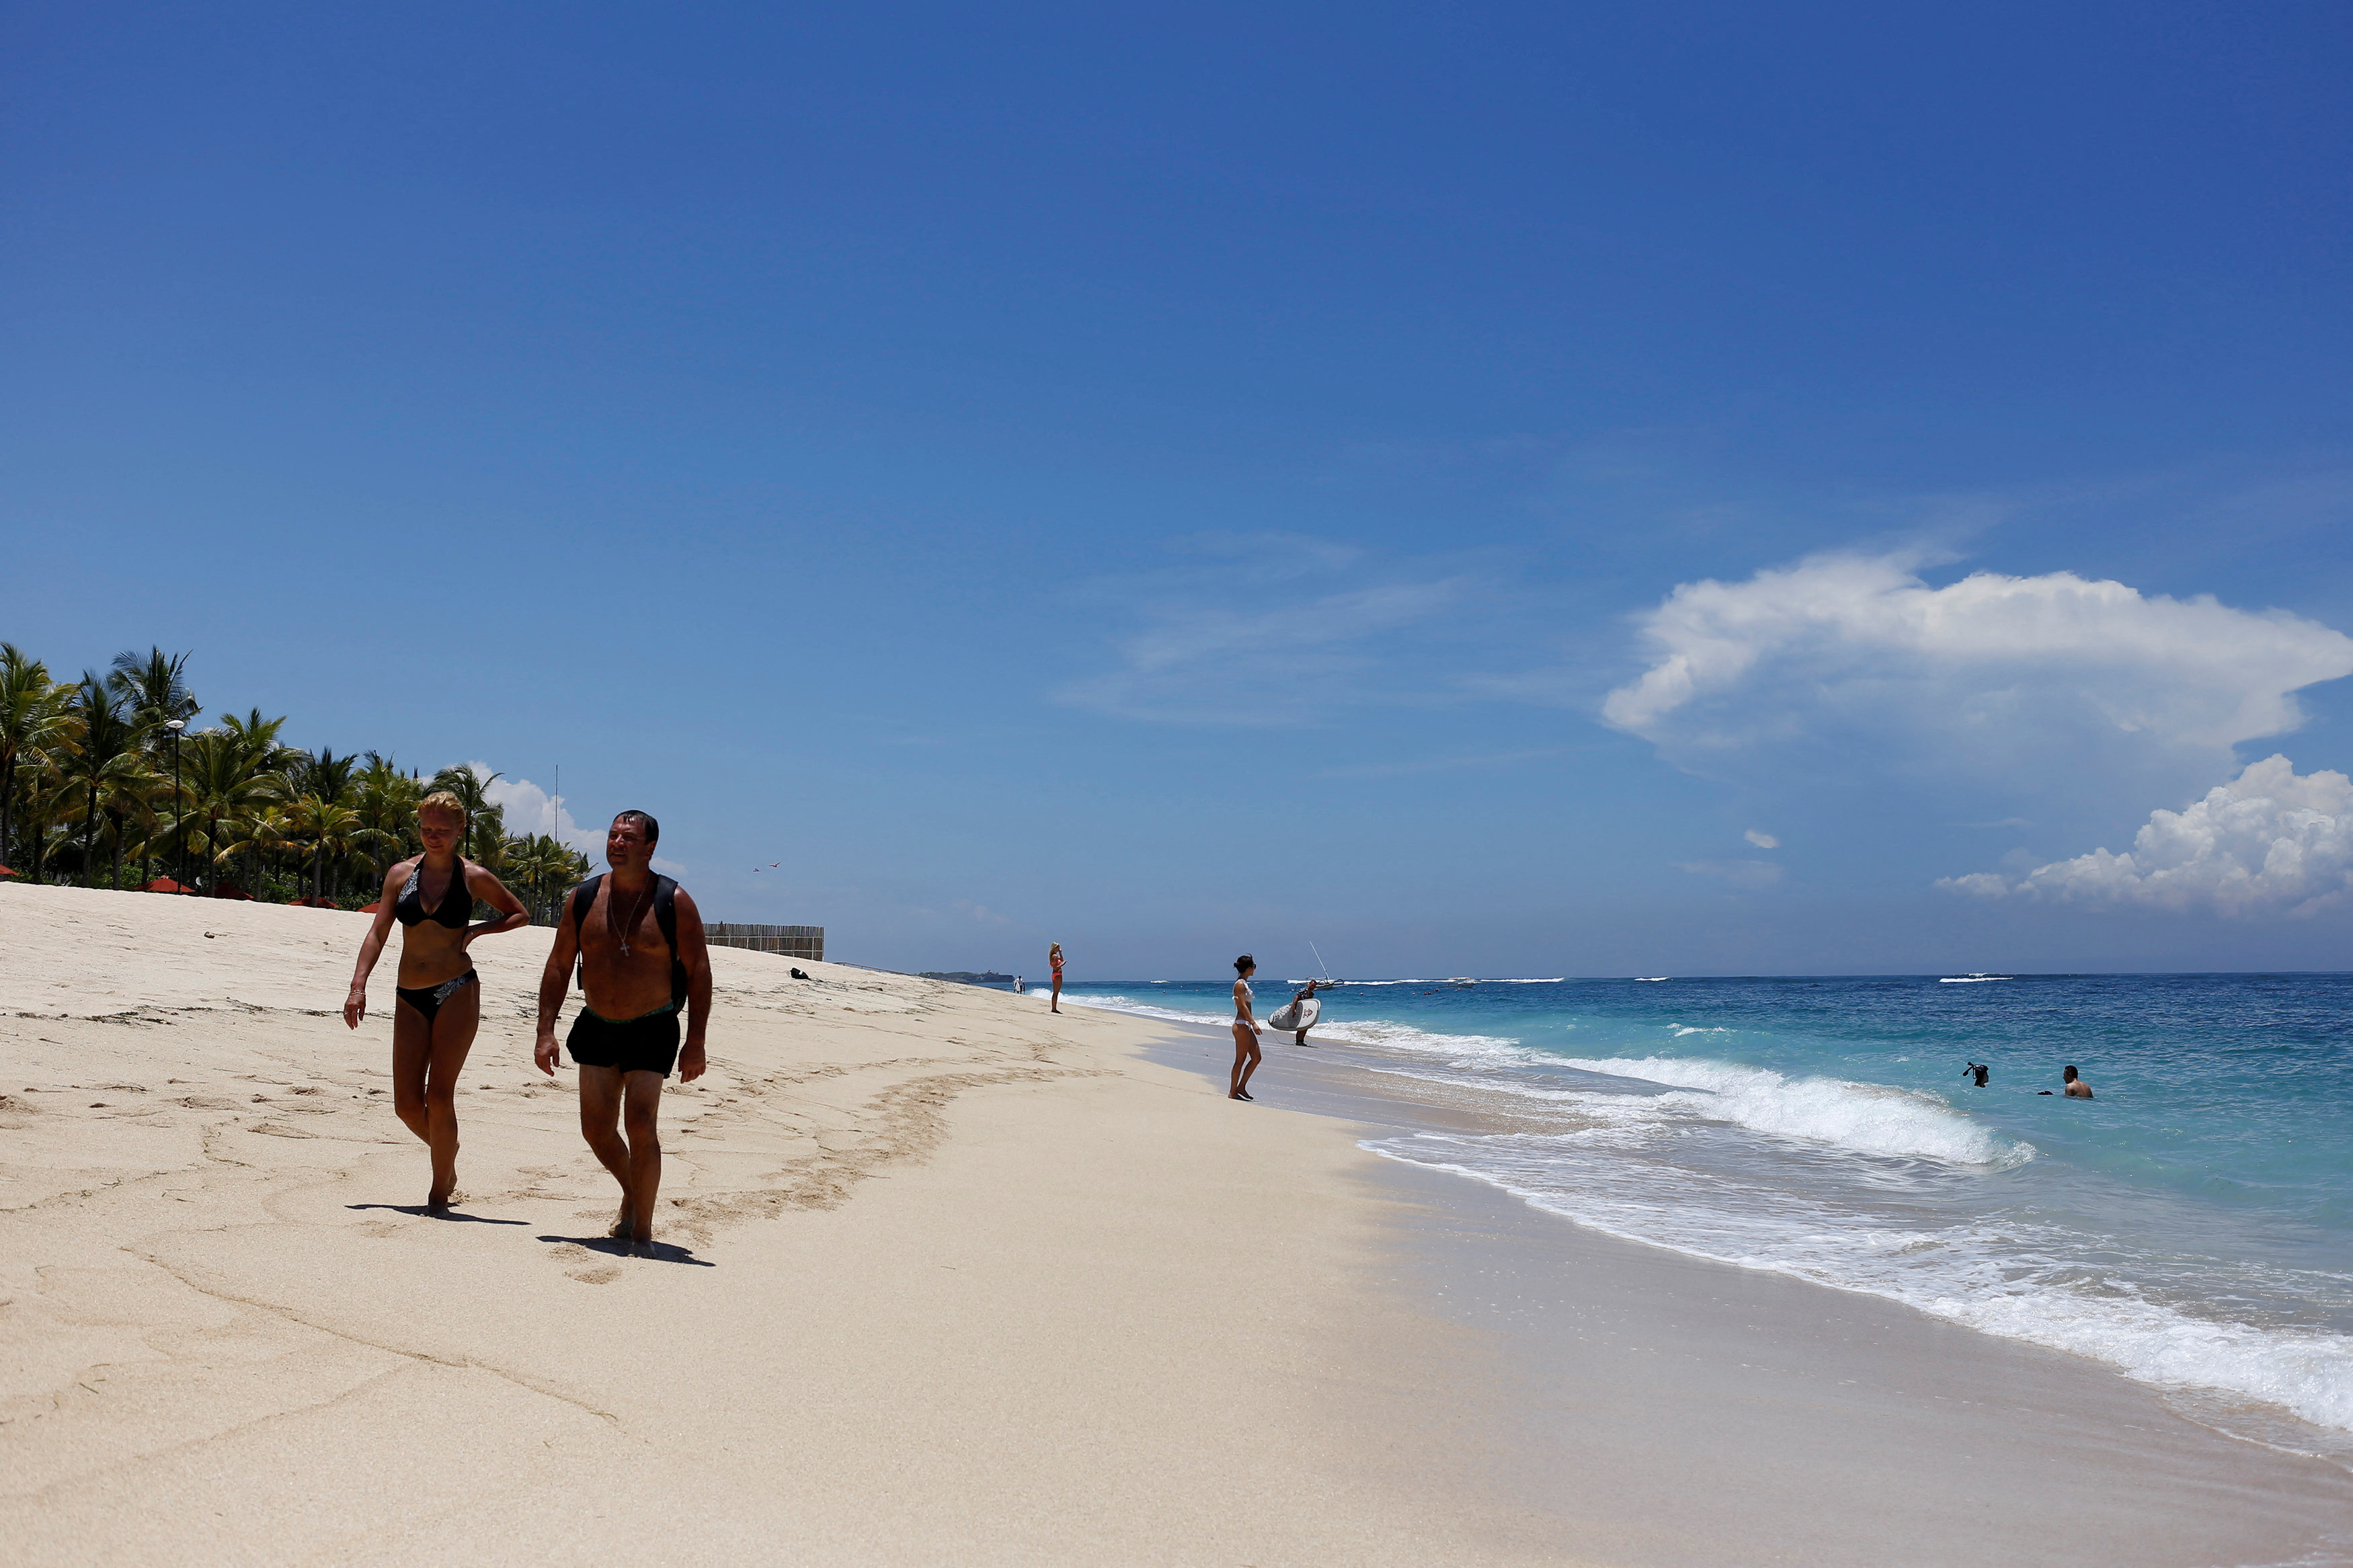 Tourists walk along a beach in the luxury resort area of Nusa Dua